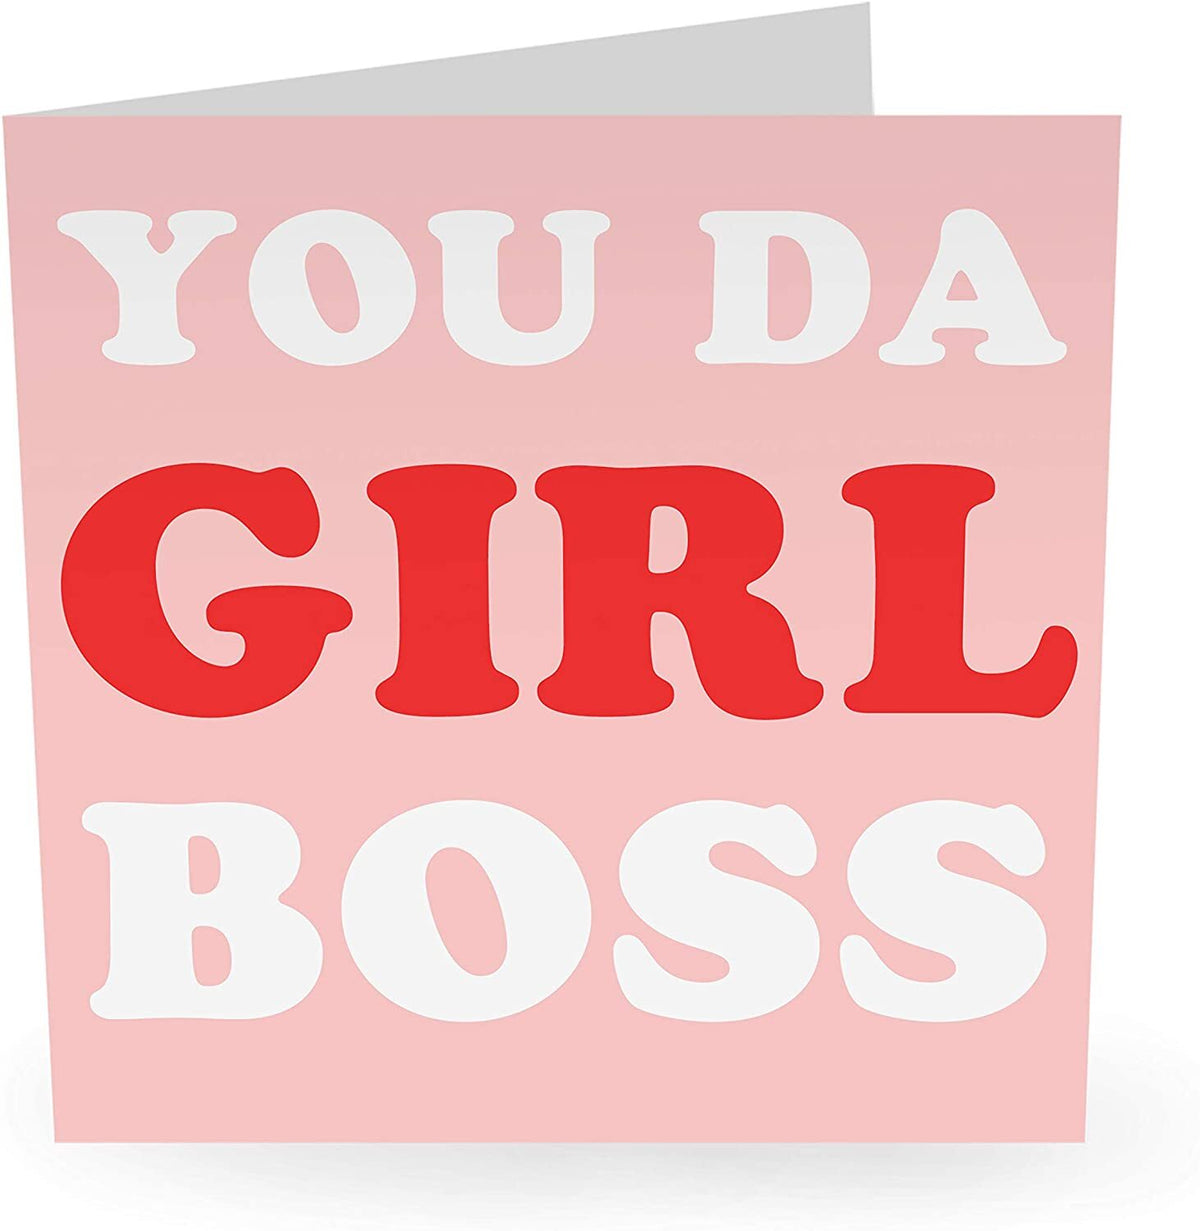 Girl boss greeting card